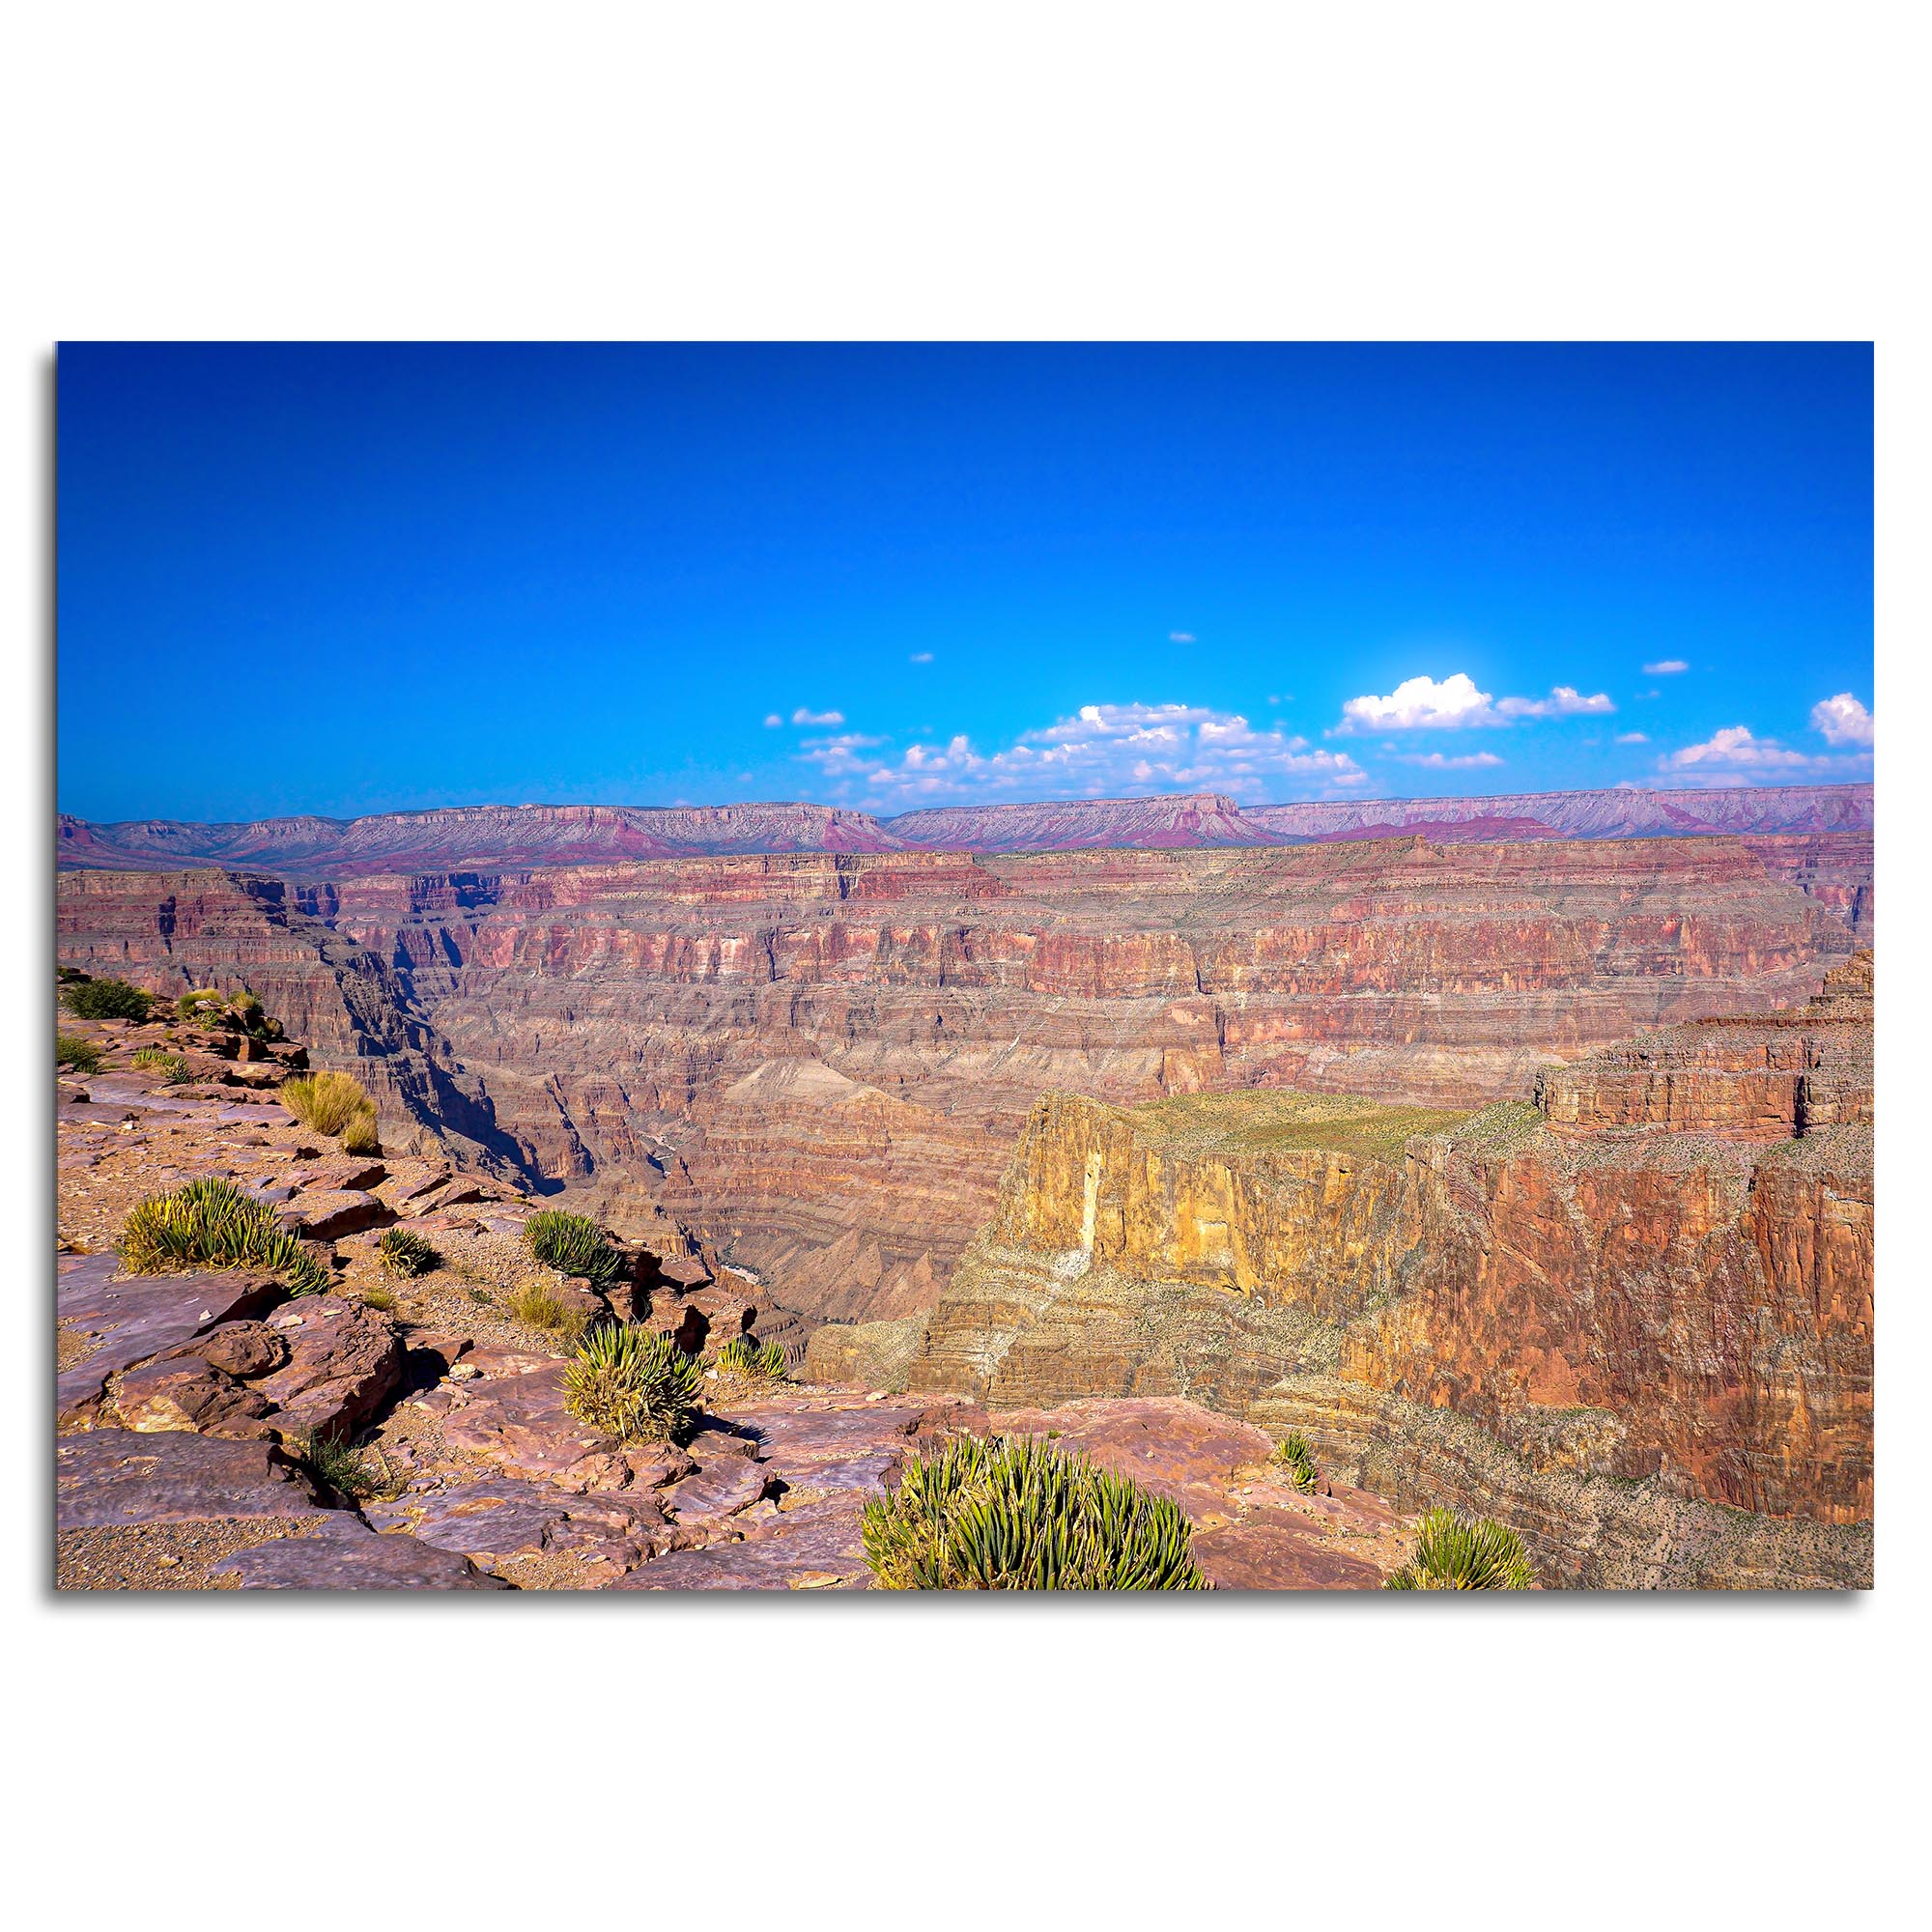 Adam Utz 'Grand Canyon Overlook' 32in x 22in Contemporary Style Desert Art